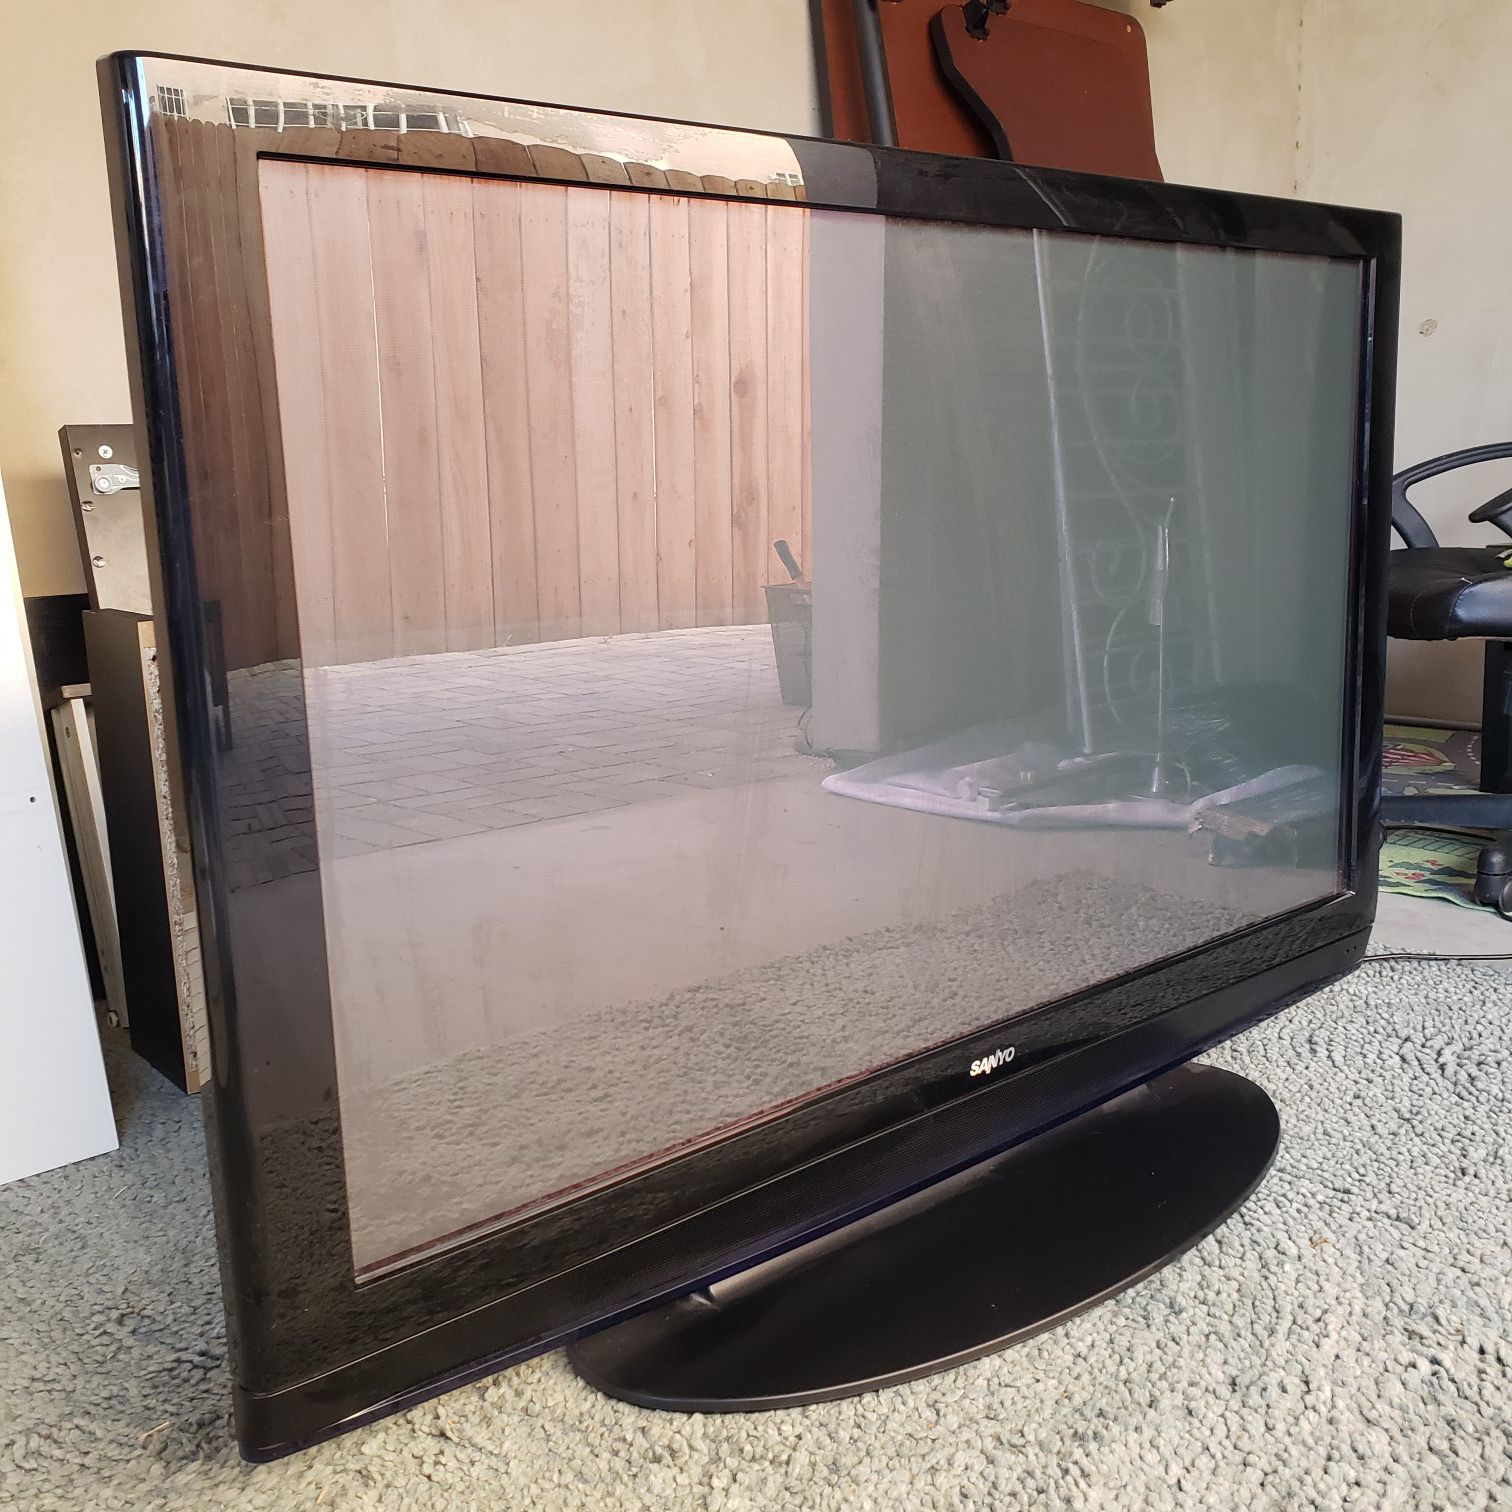 Sanyo DP50710 50-inch Class Plasma 600Hz HDTV